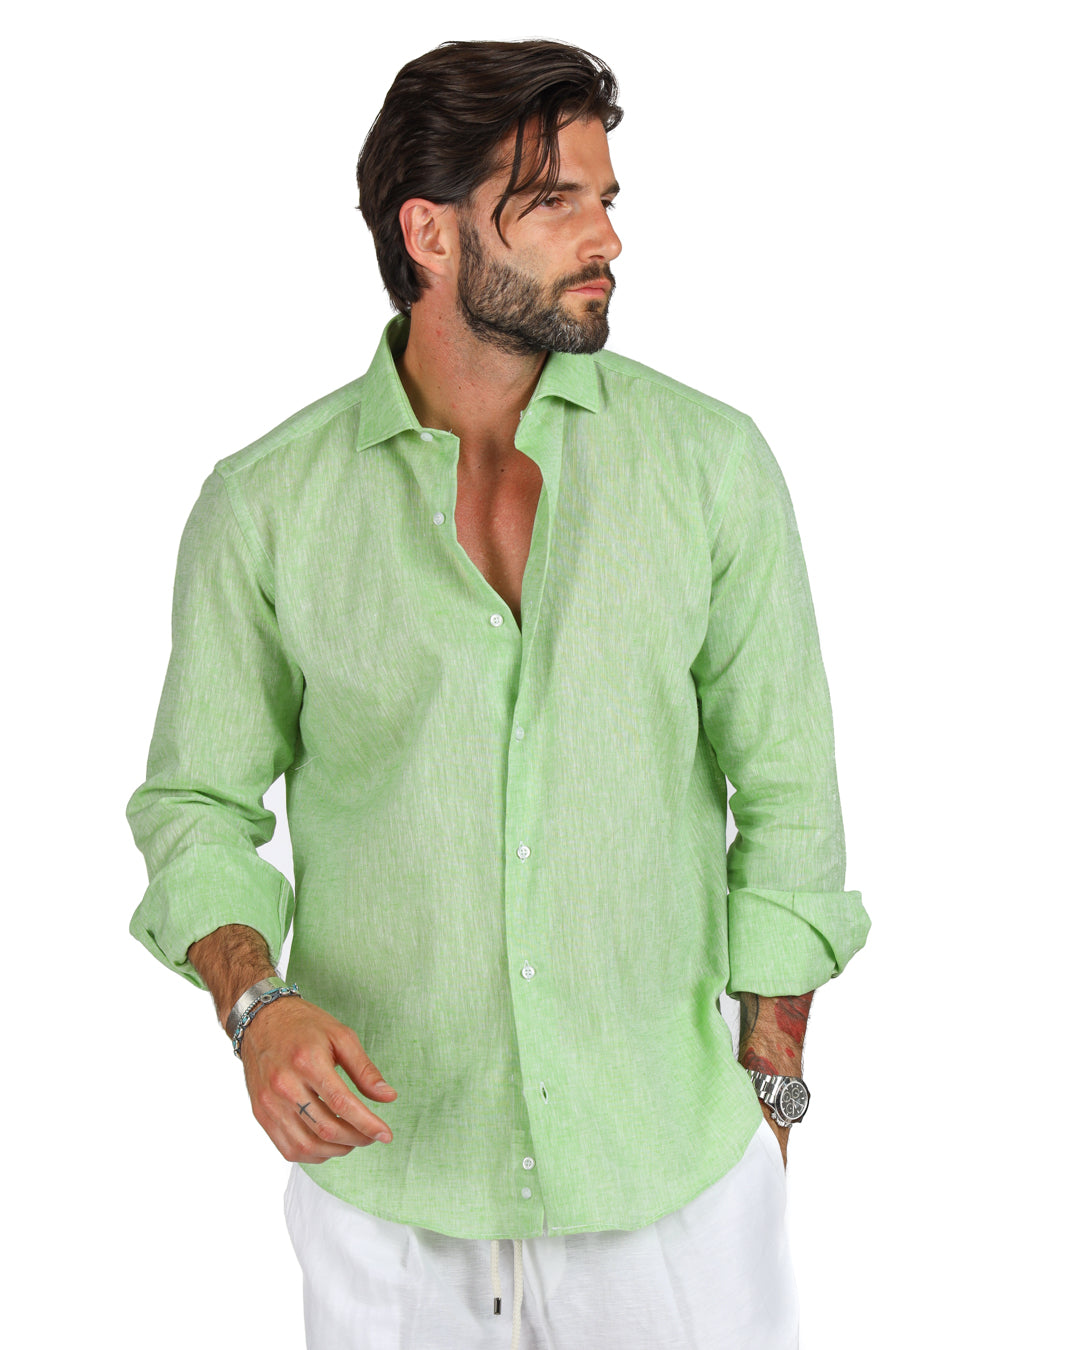 Praiano - Classic apple green linen shirt